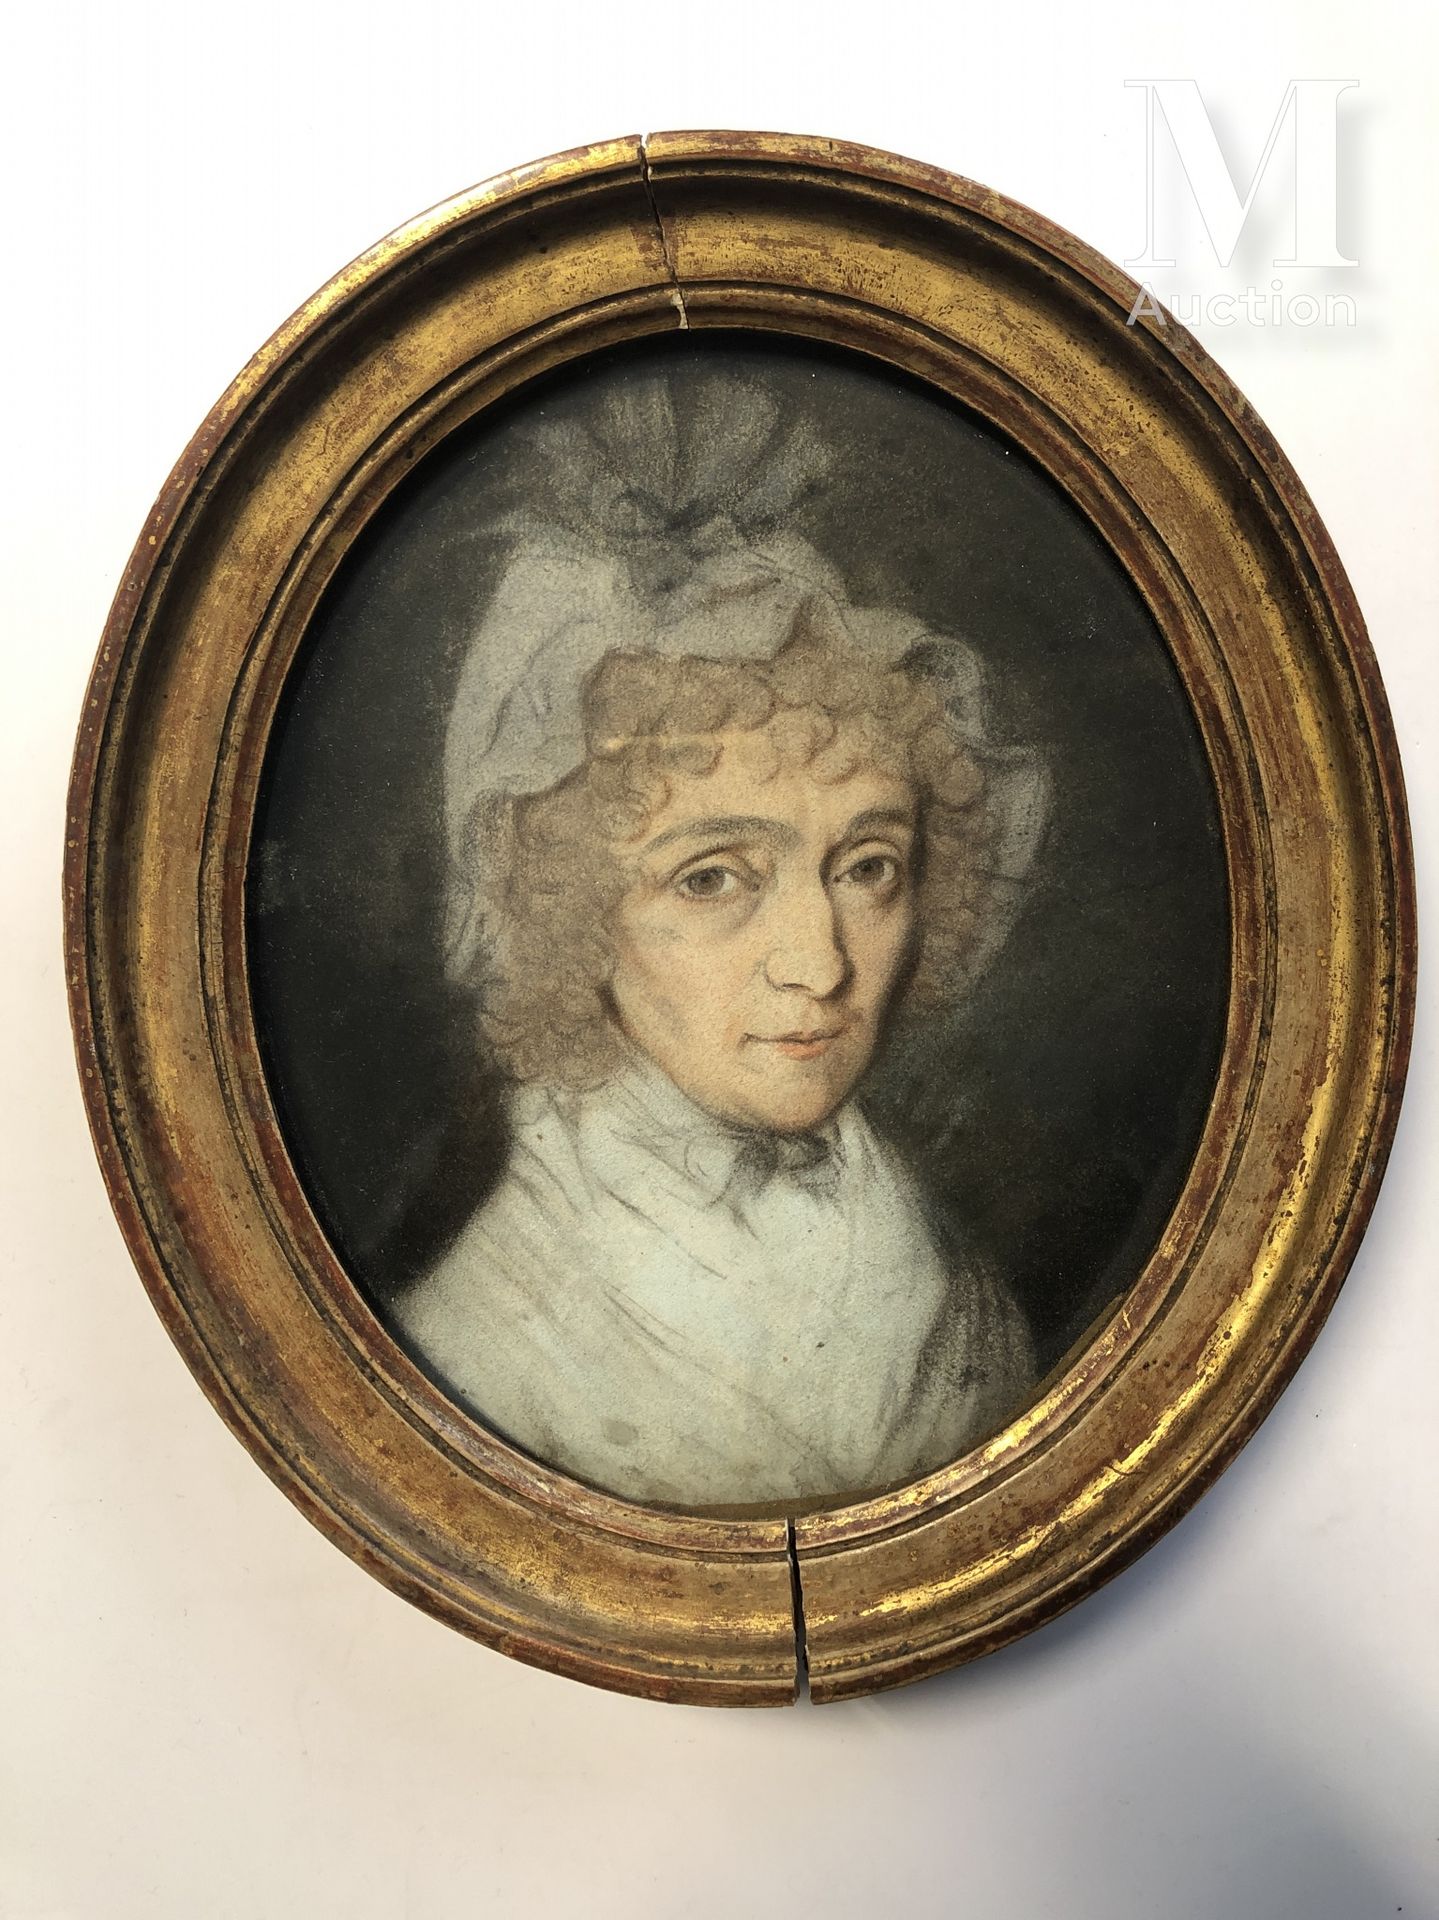 Ecole Française du XVIIIème siècle 戴白帽的女人的画像

椭圆形视图的粉彩画

17 x 15厘米